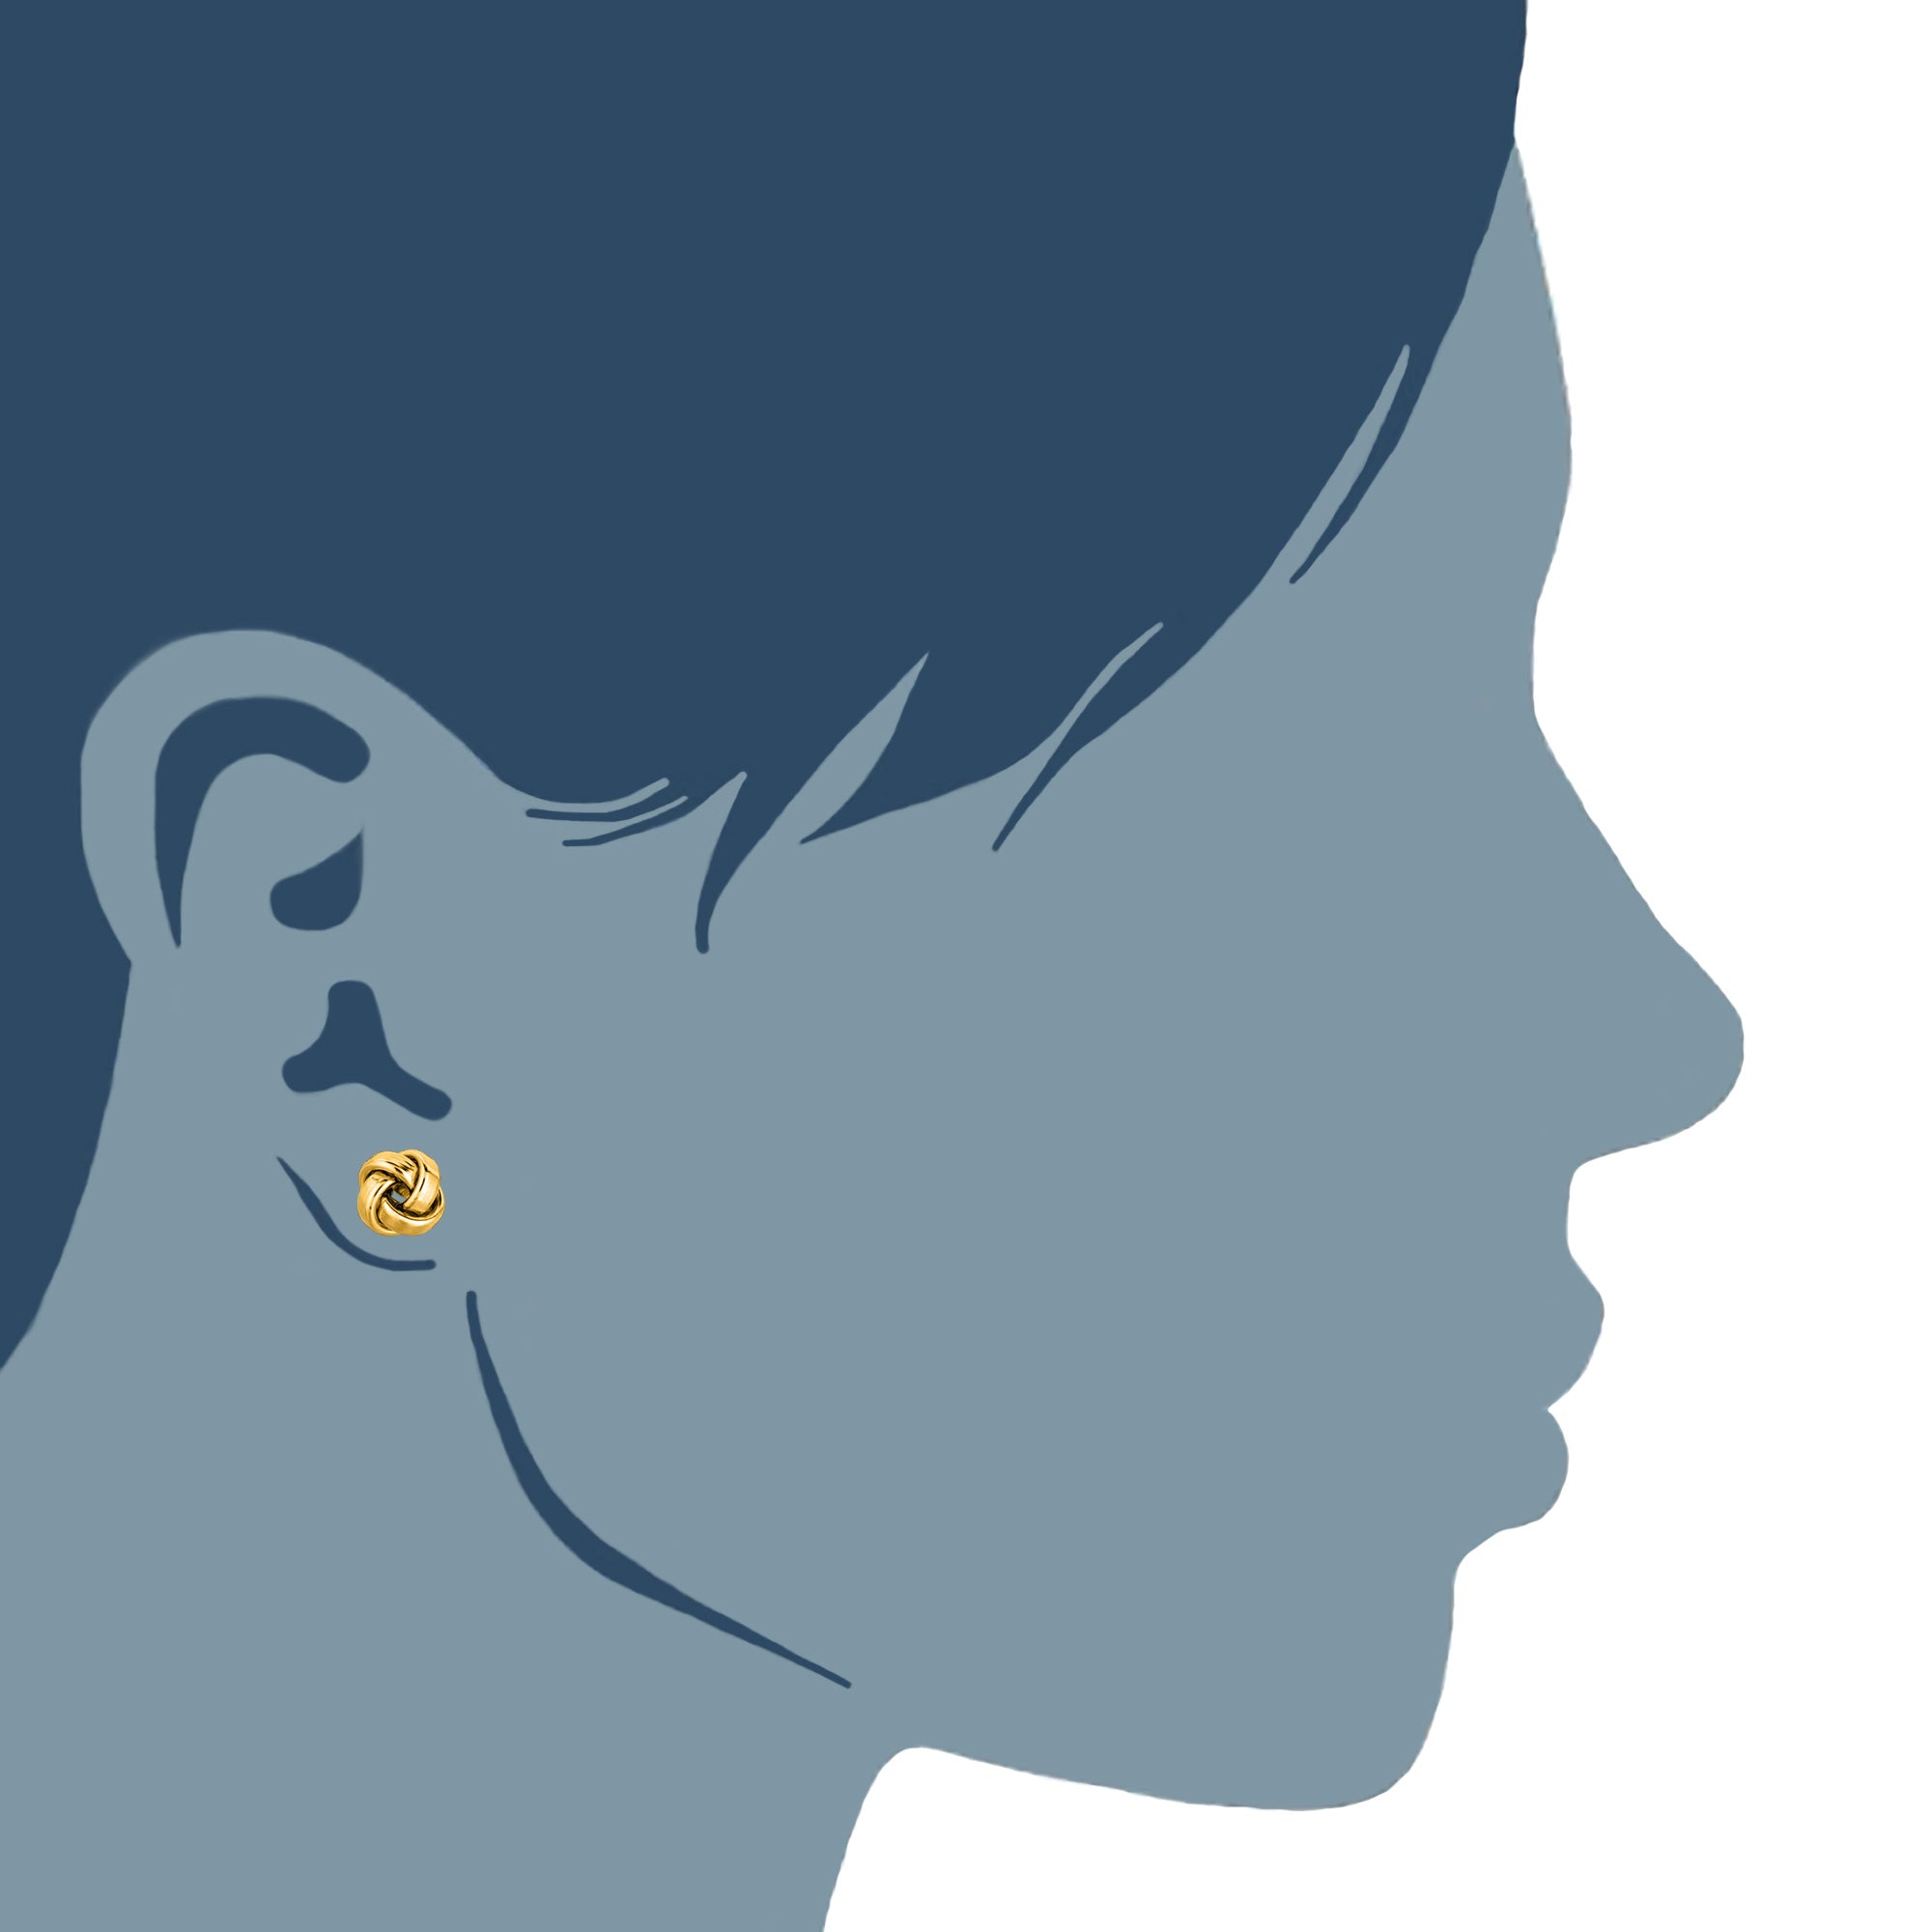 14k Gold Shiny Square Tube Love Knot Stud Earrings, 10mm